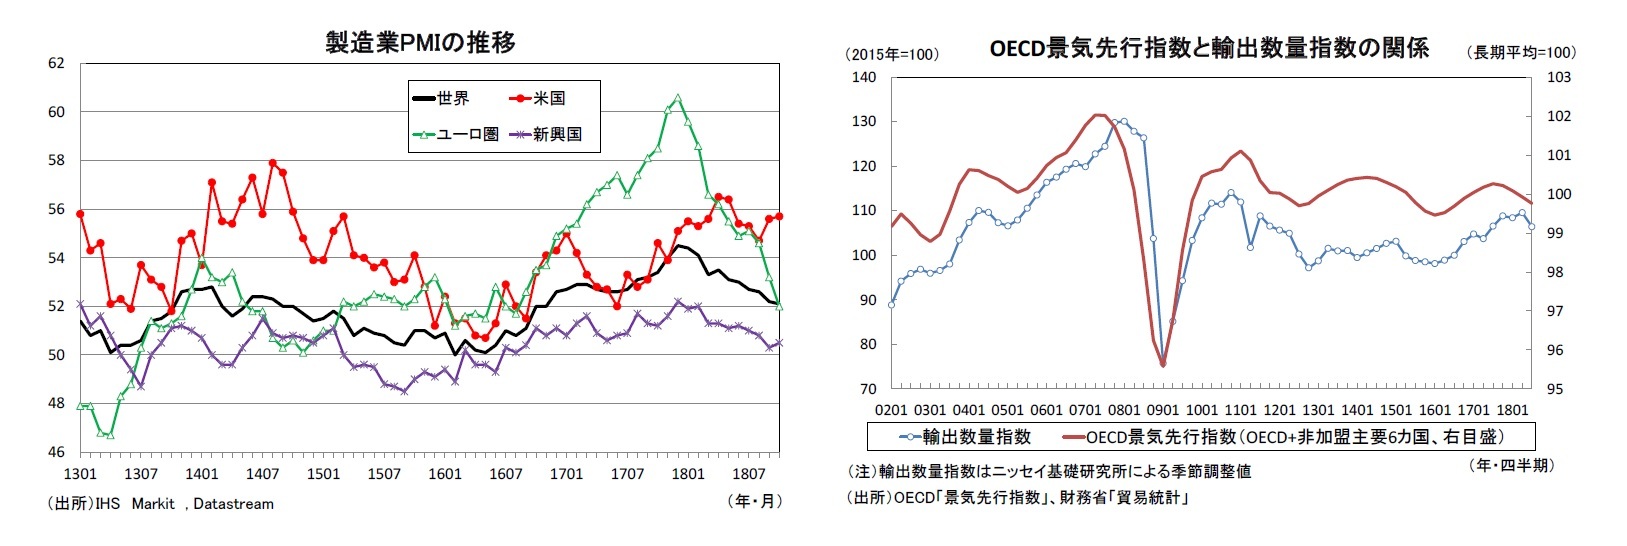 製造業PMIの推移/OECD景気先行指数と輸出数量指数の関係